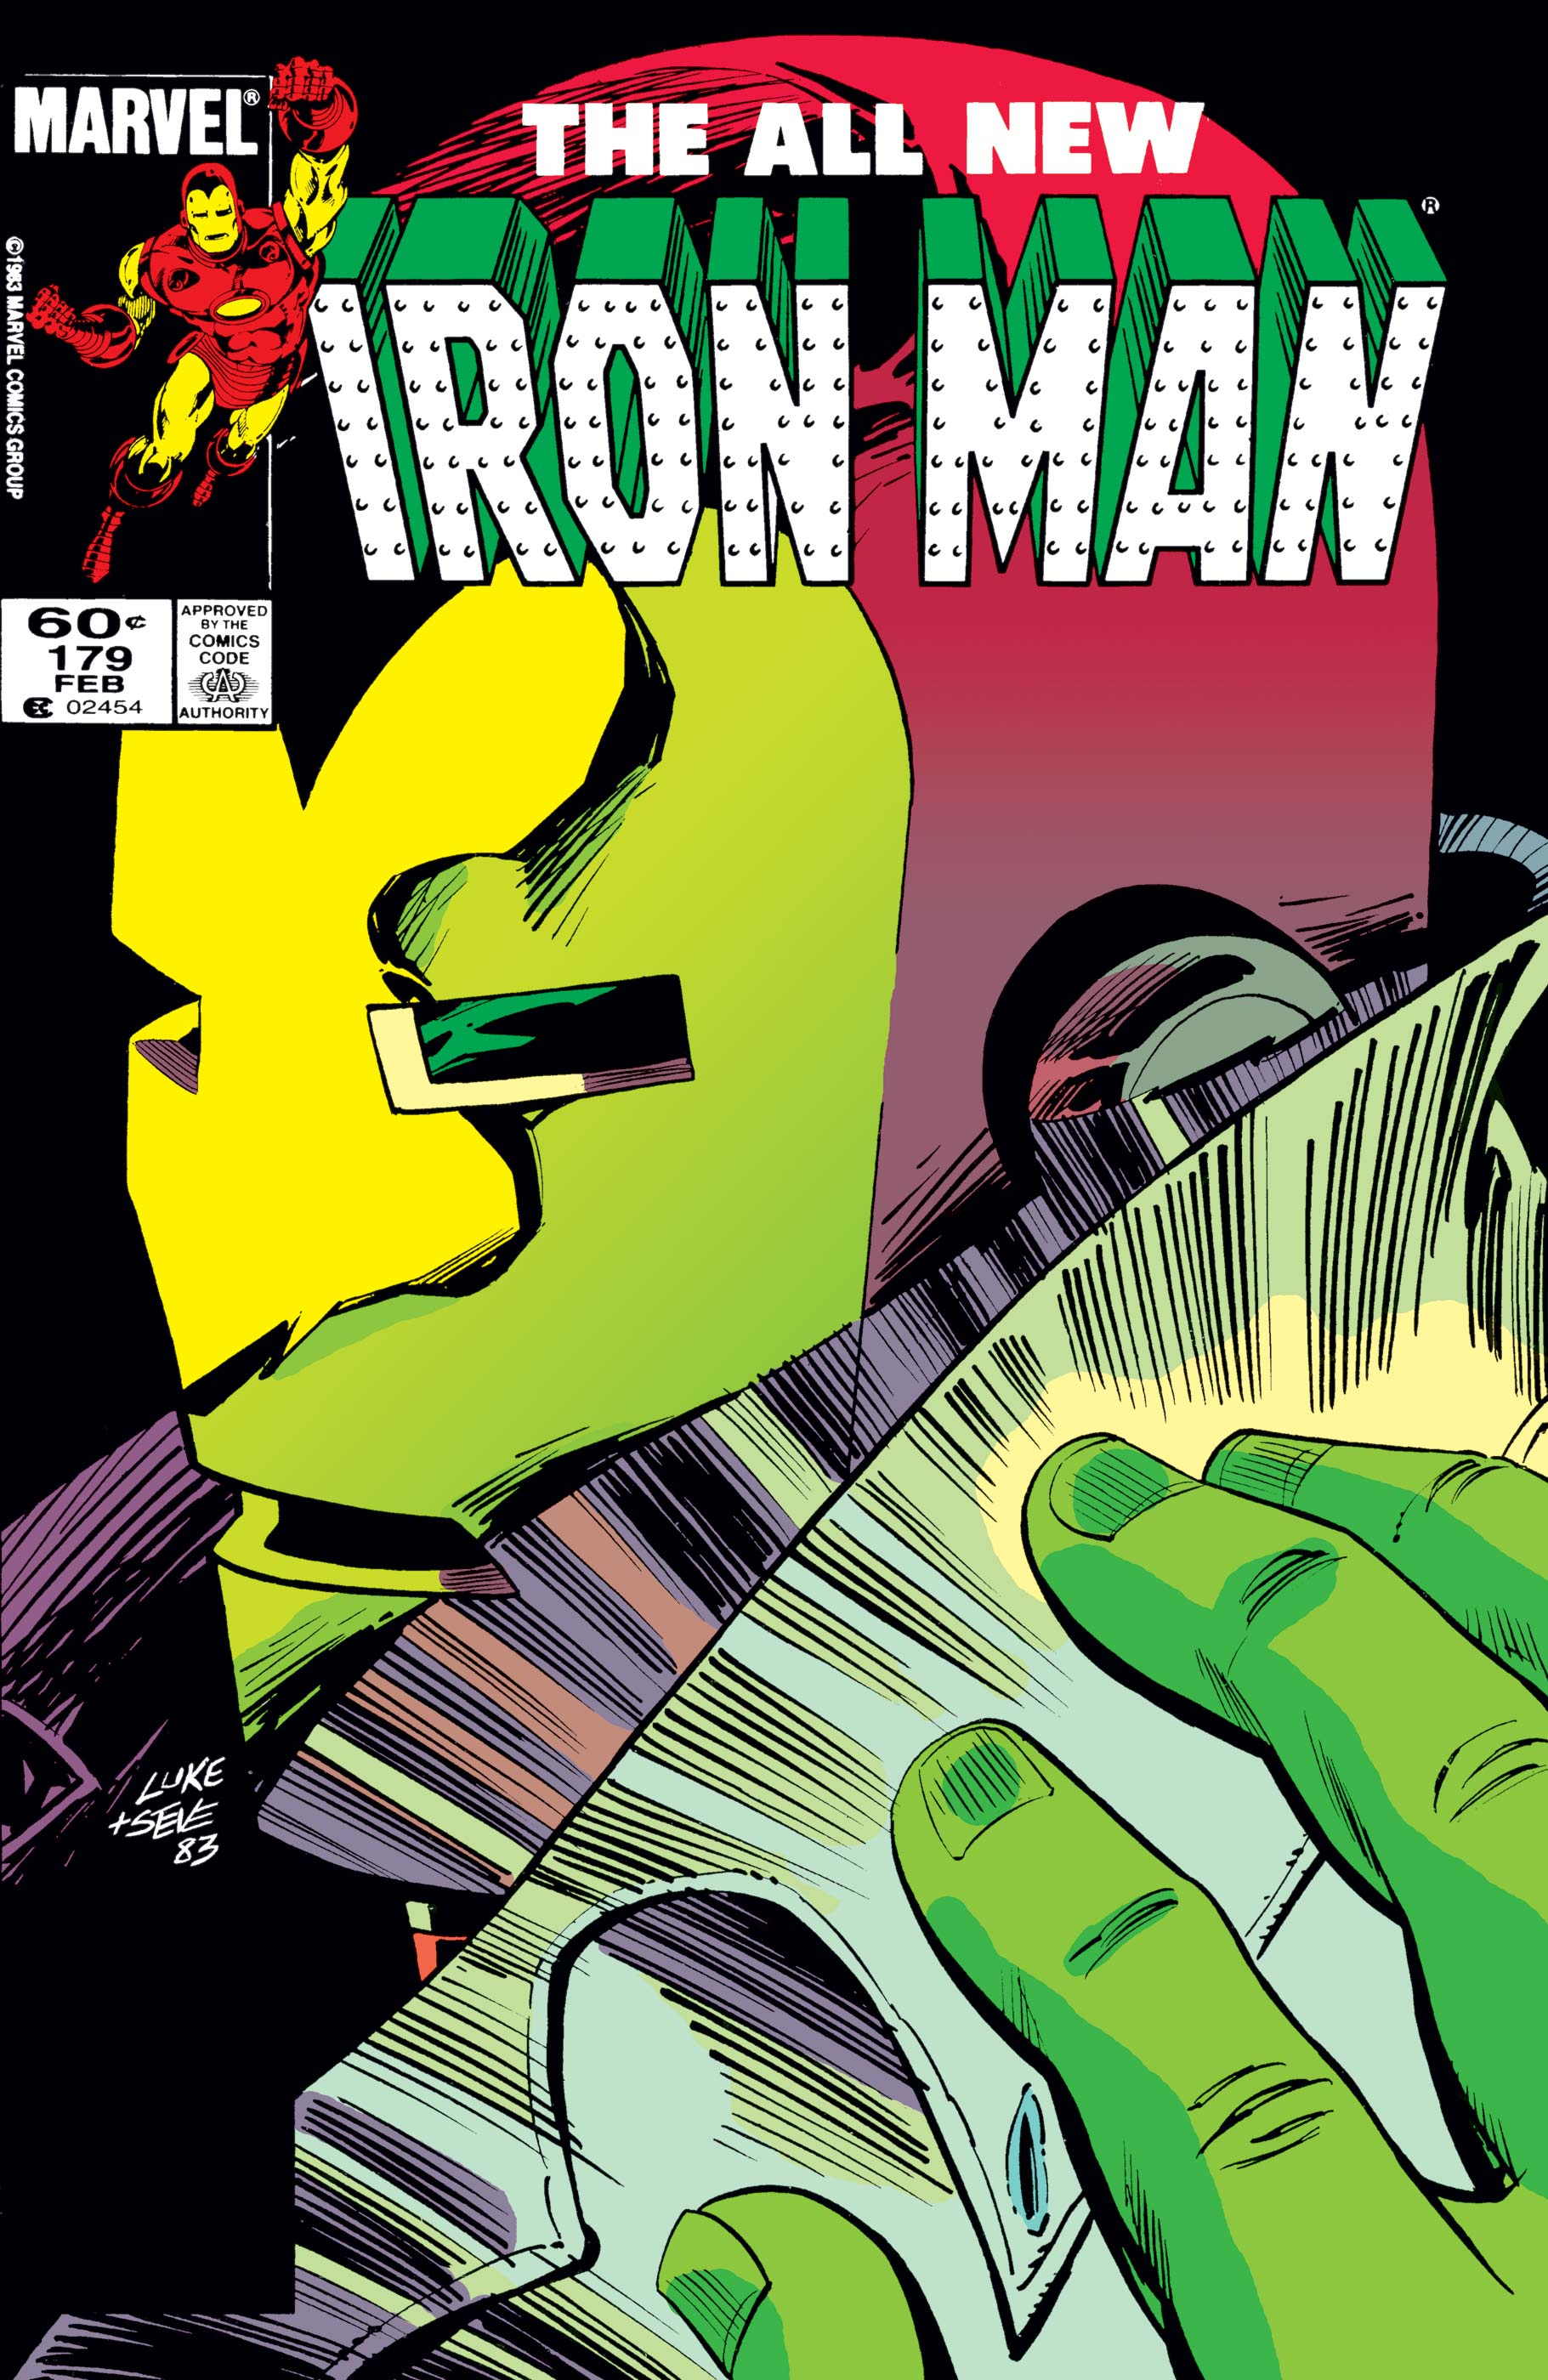 Iron Man (1968) #179